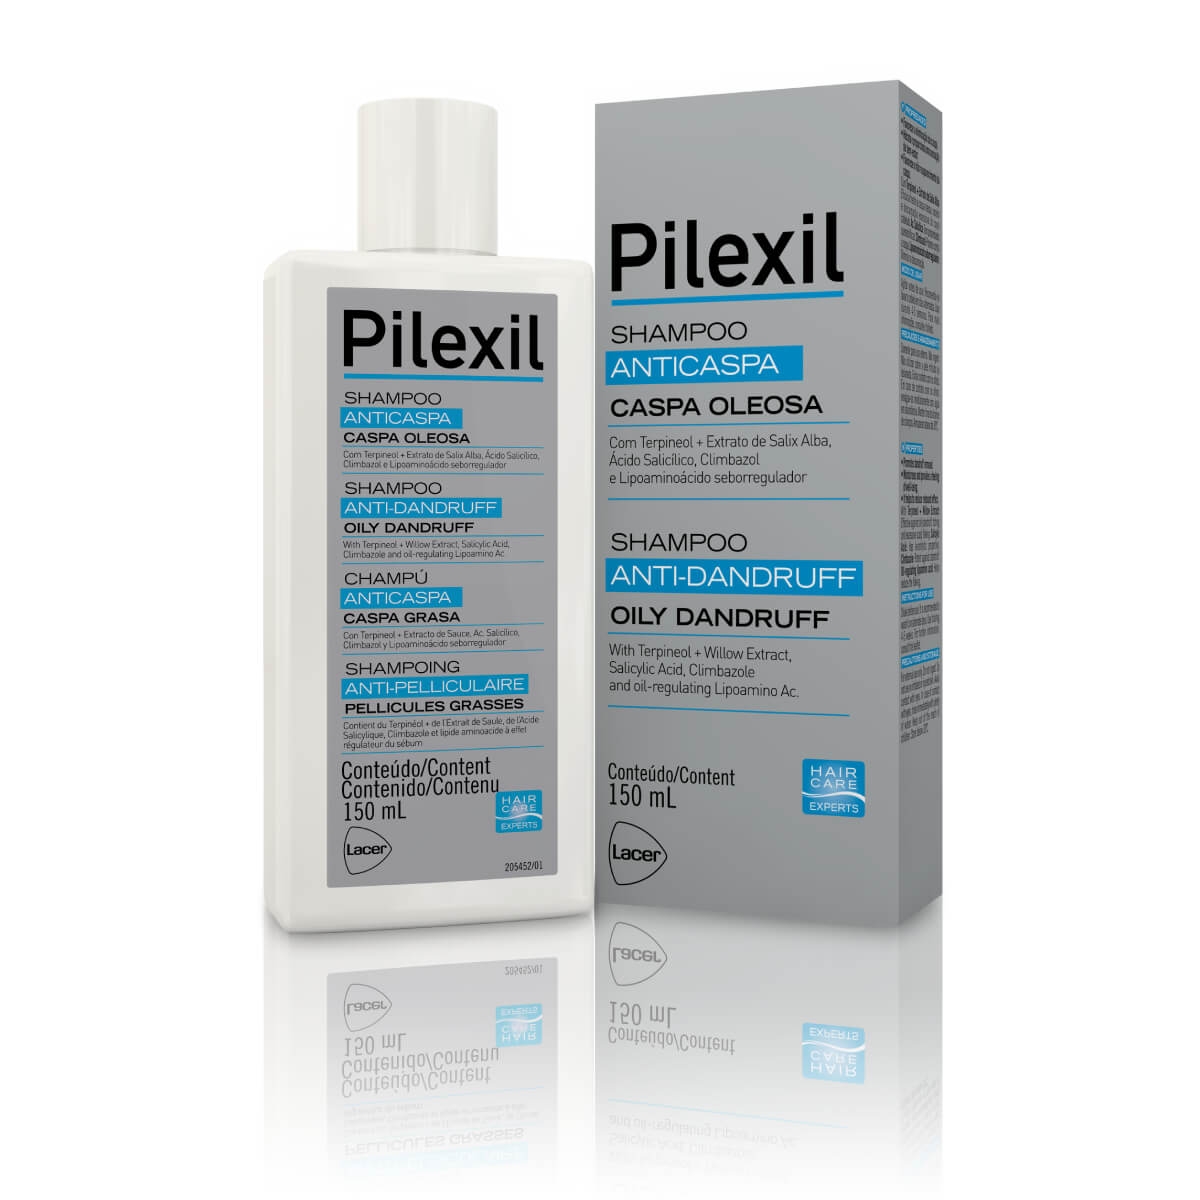 Shampoo Anticaspa Pilexil Caspa Oleosa